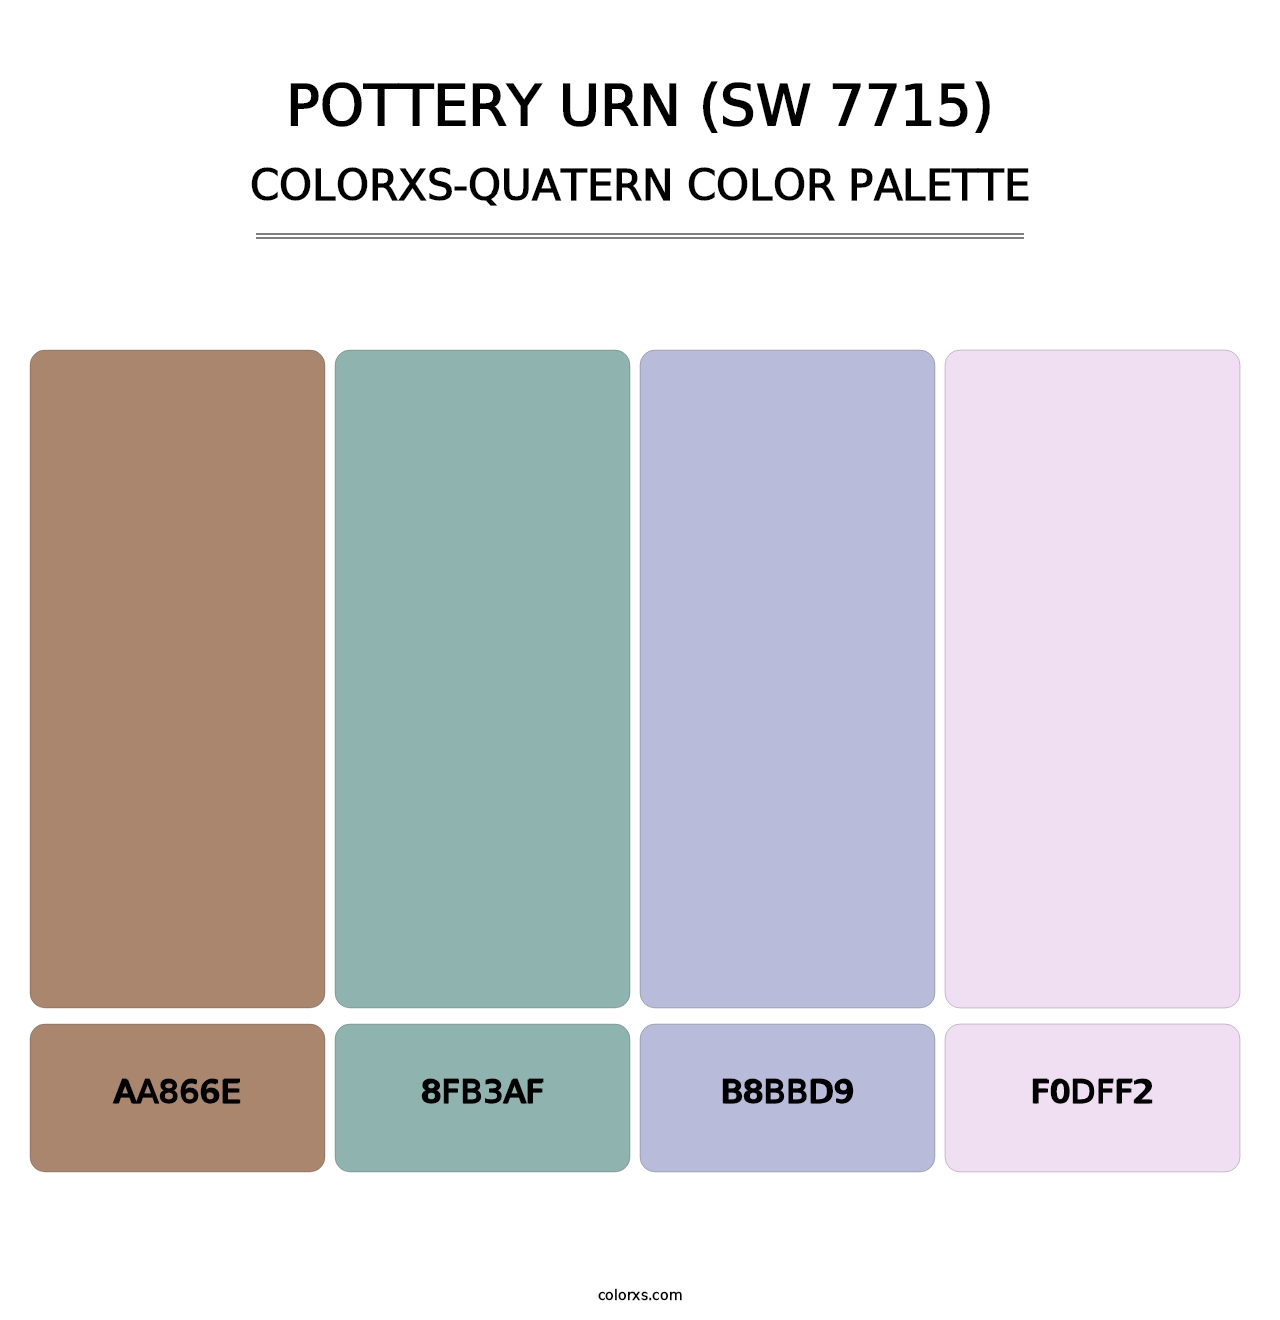 Pottery Urn (SW 7715) - Colorxs Quatern Palette